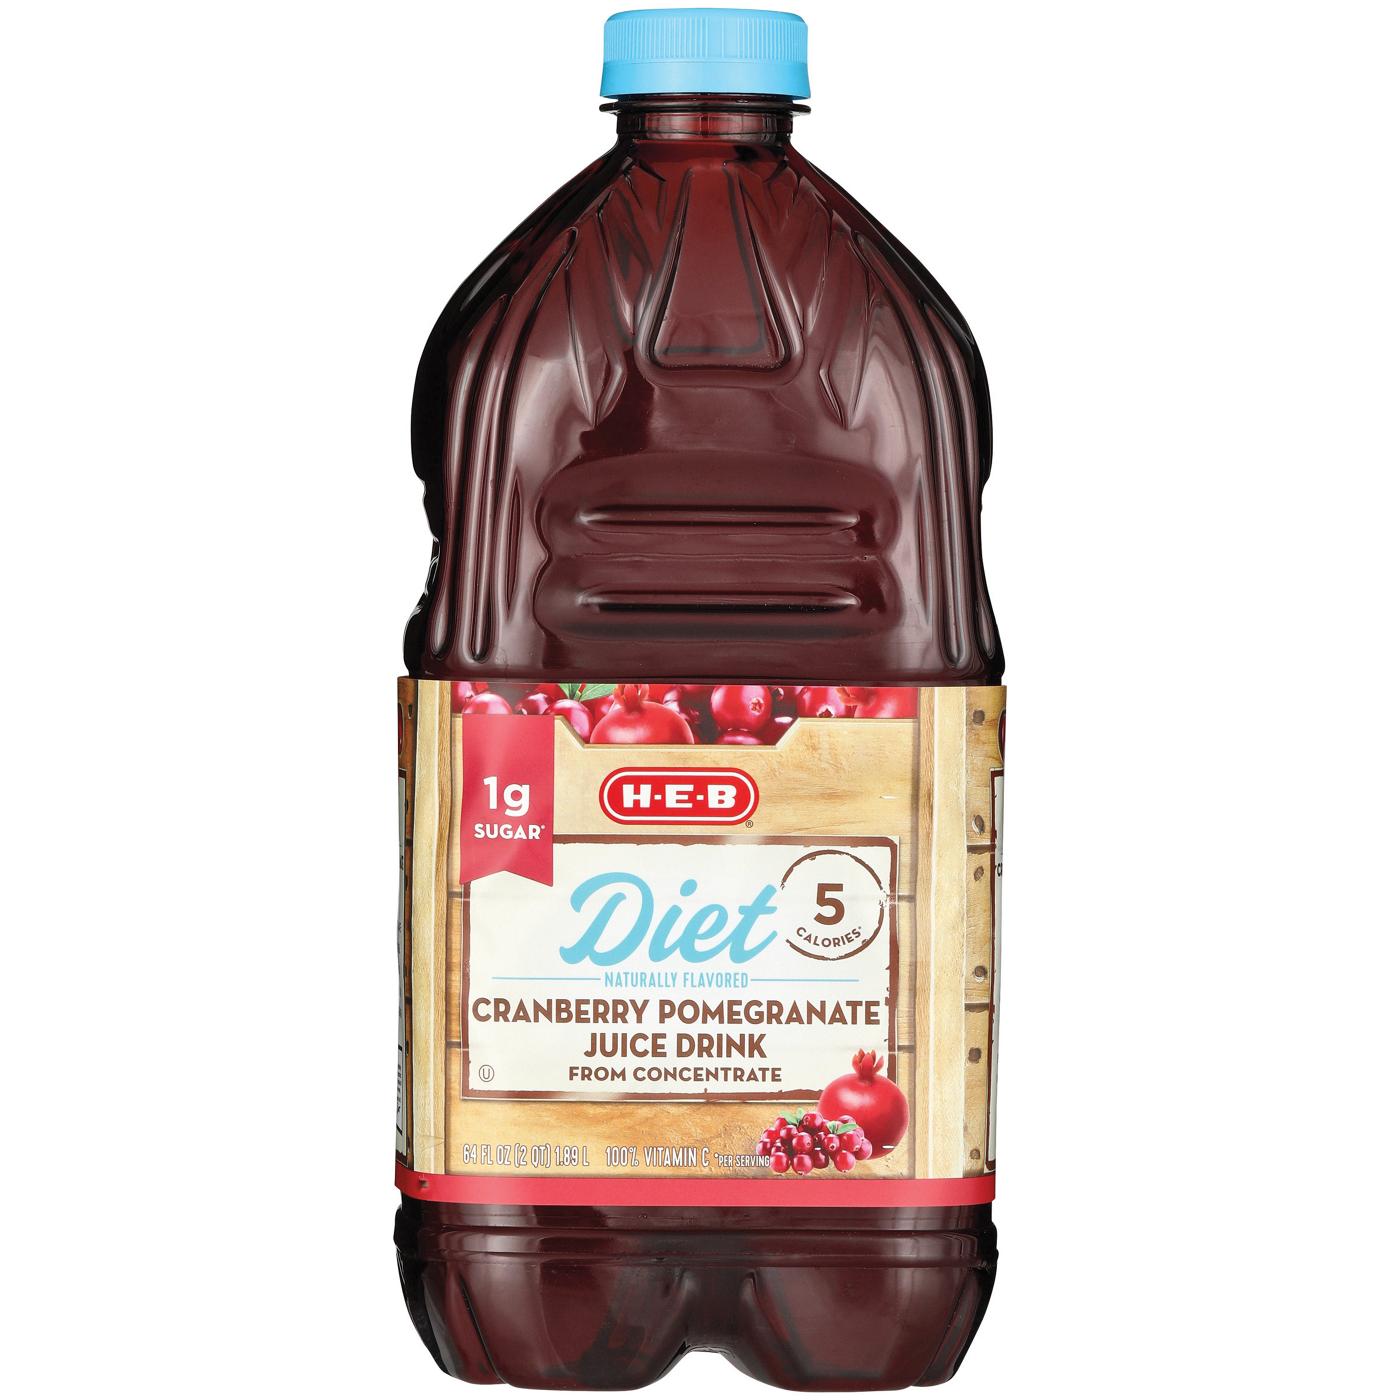 H-E-B Diet Cranberry Pomegranate Juice Cocktail; image 1 of 2